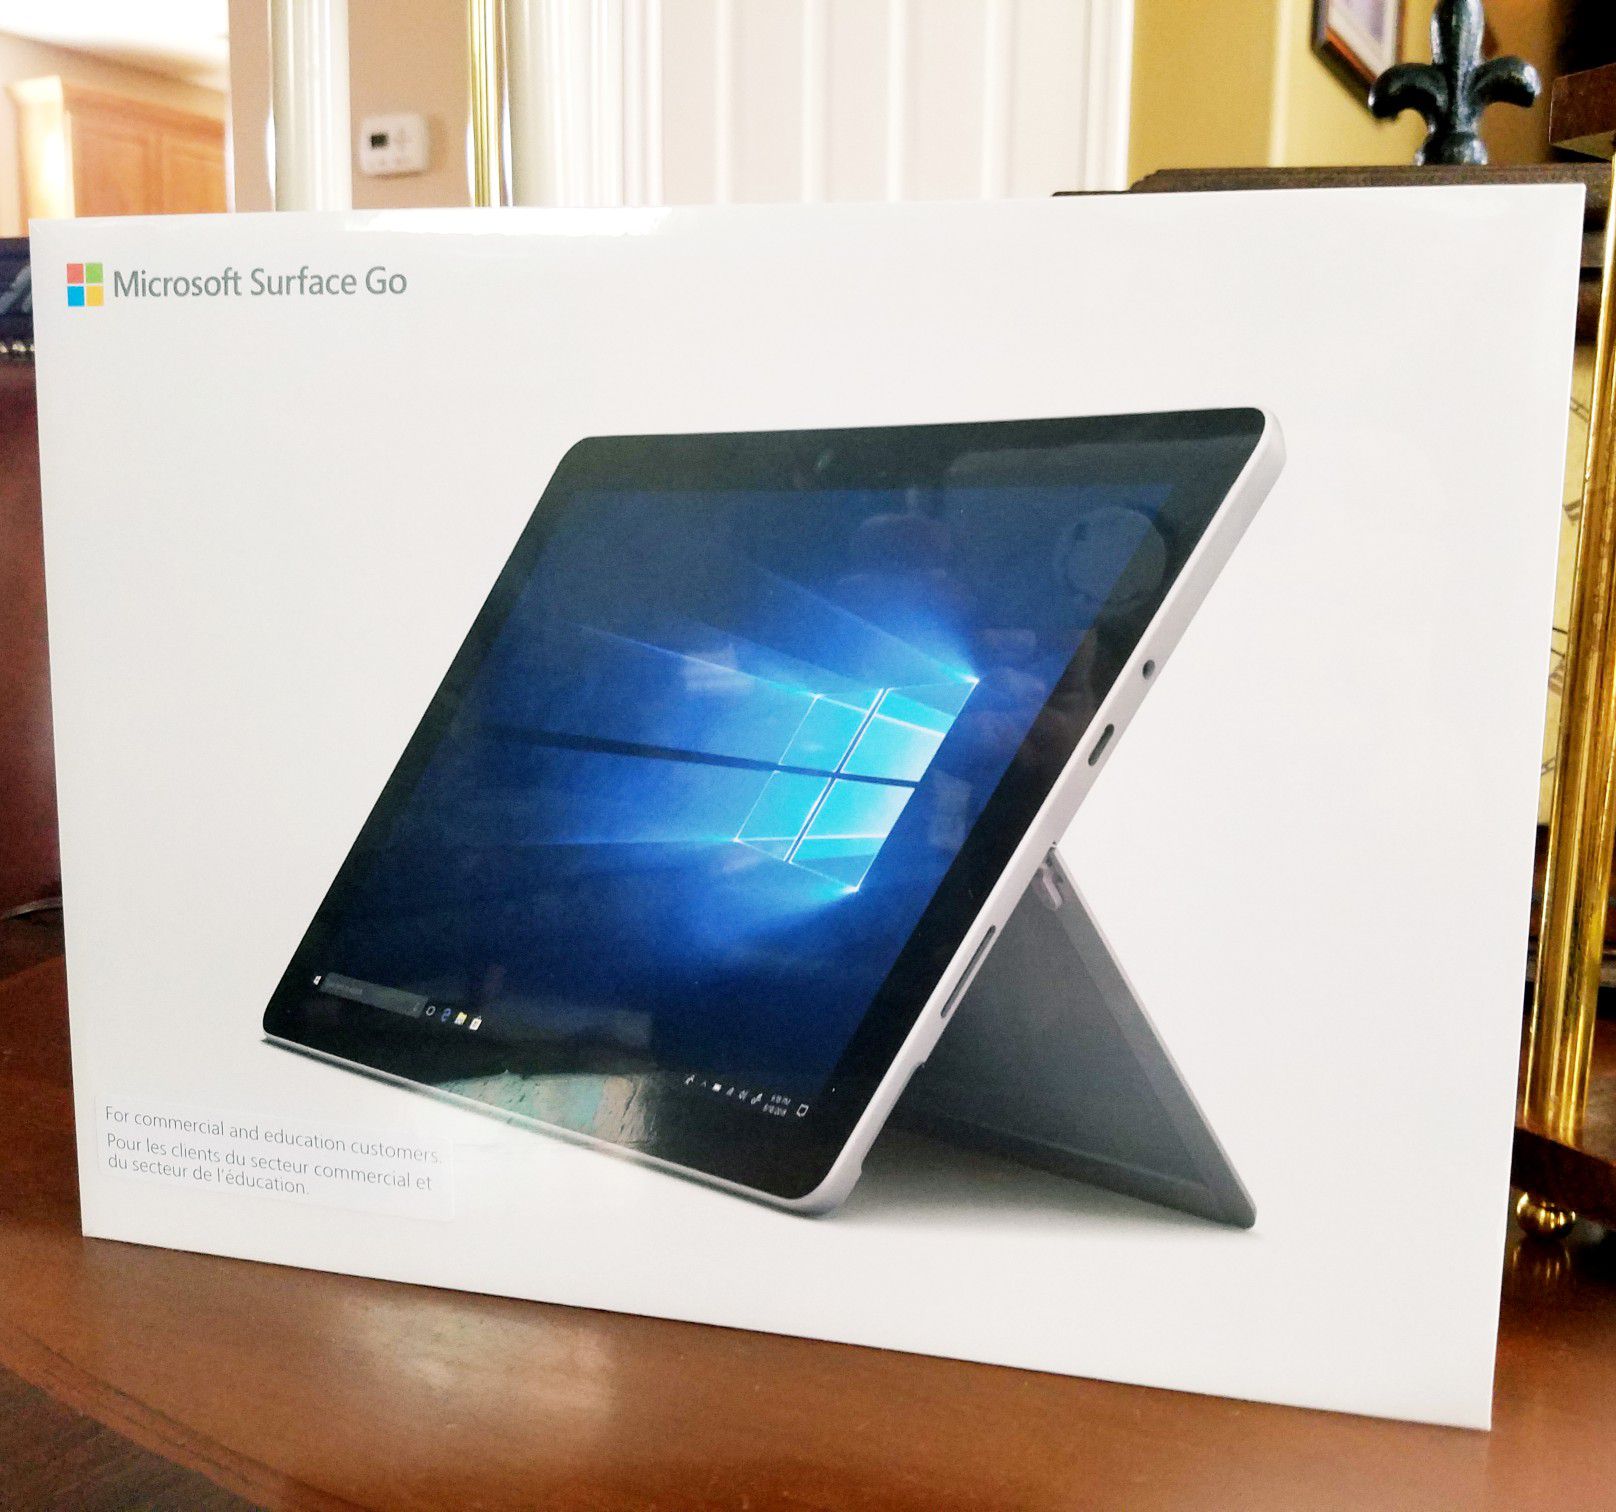 Microsoft Surface Go 10″ - Pentium Gold 1.6 GHz - 4 GB RAM - 64GB Storage - New in Sealed Box